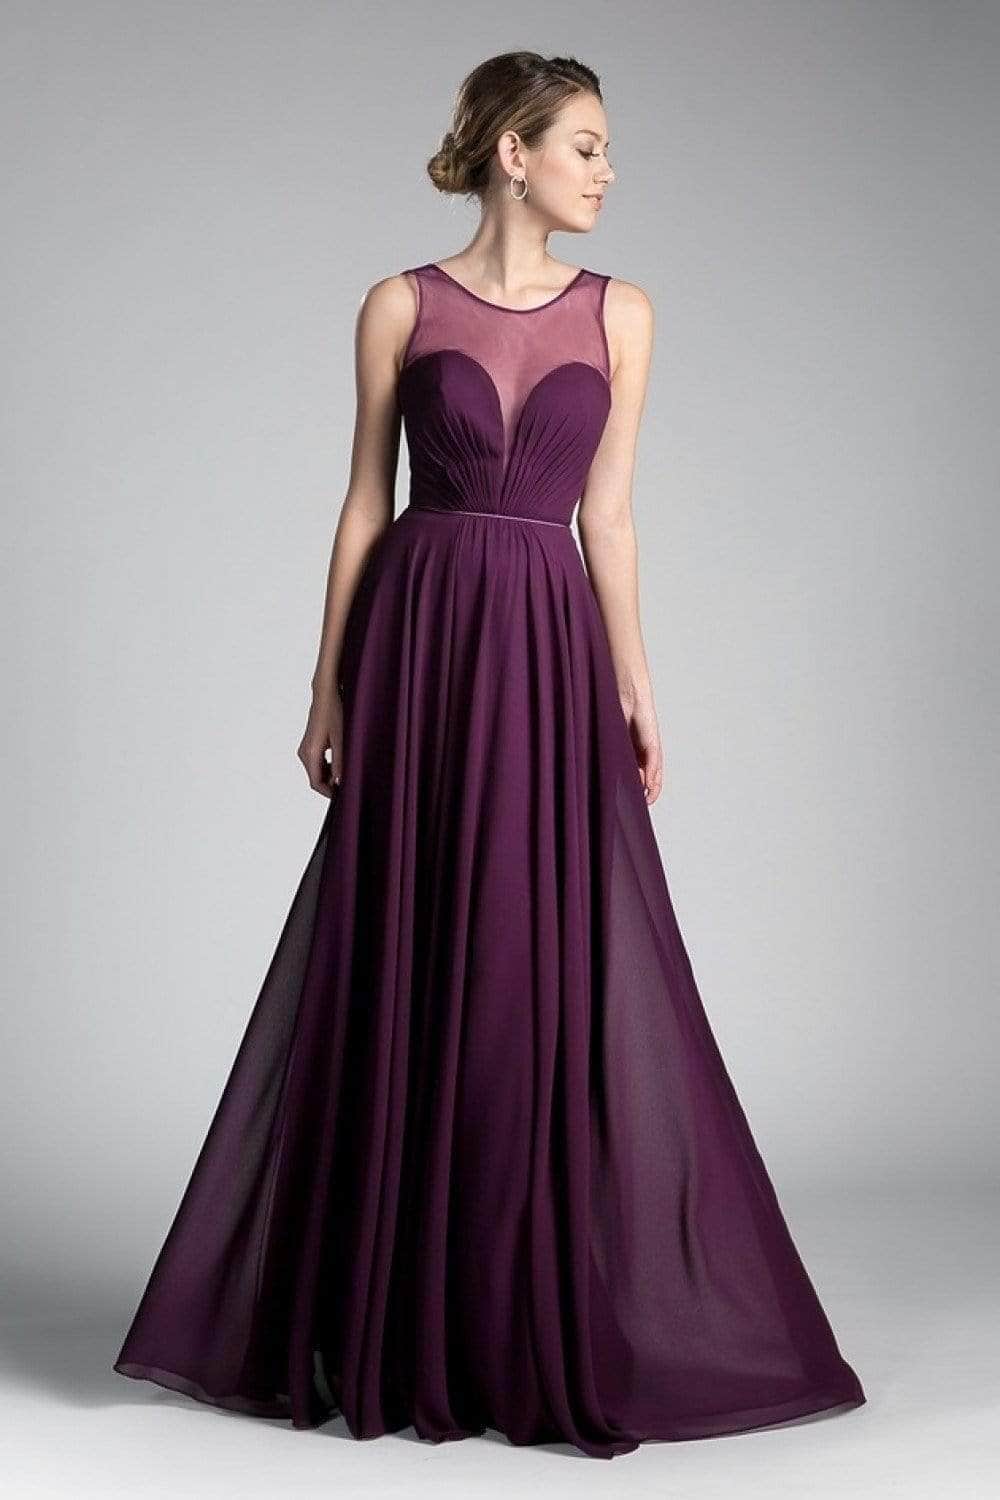 Ladivine CJ251 - Illusion Jewel A-Line Evening Gown Evening Dresses 4 